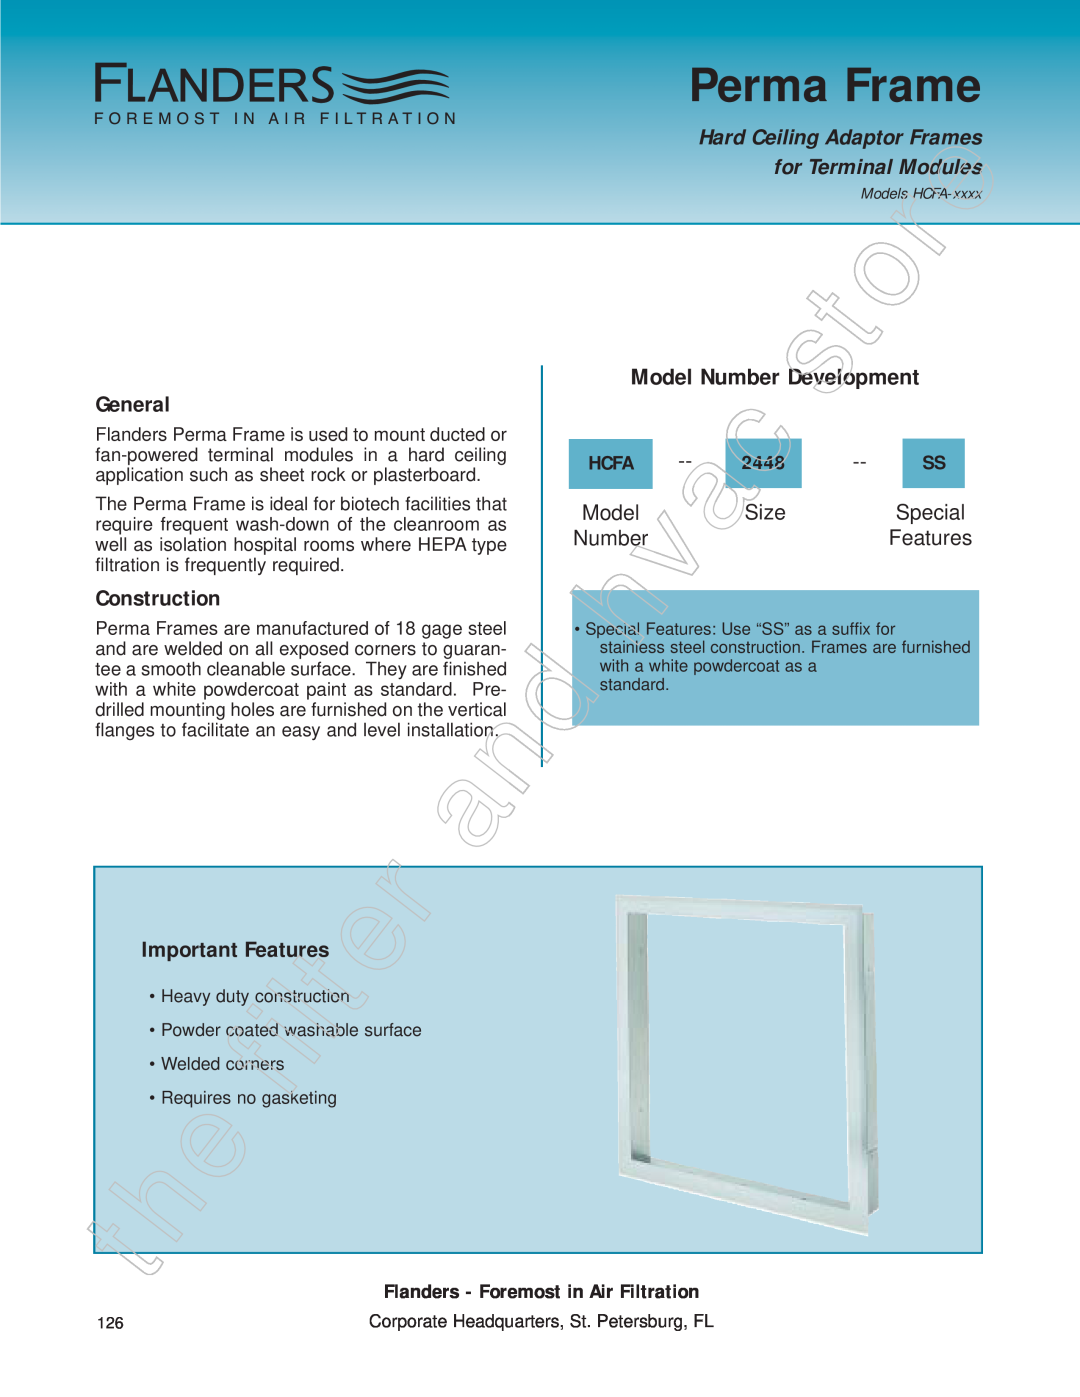 Honeywell 11255 manual Perma Frame, Hard Ceiling Adaptor Frames for Terminal Modules, Hcfa, 2448, General, Construction 